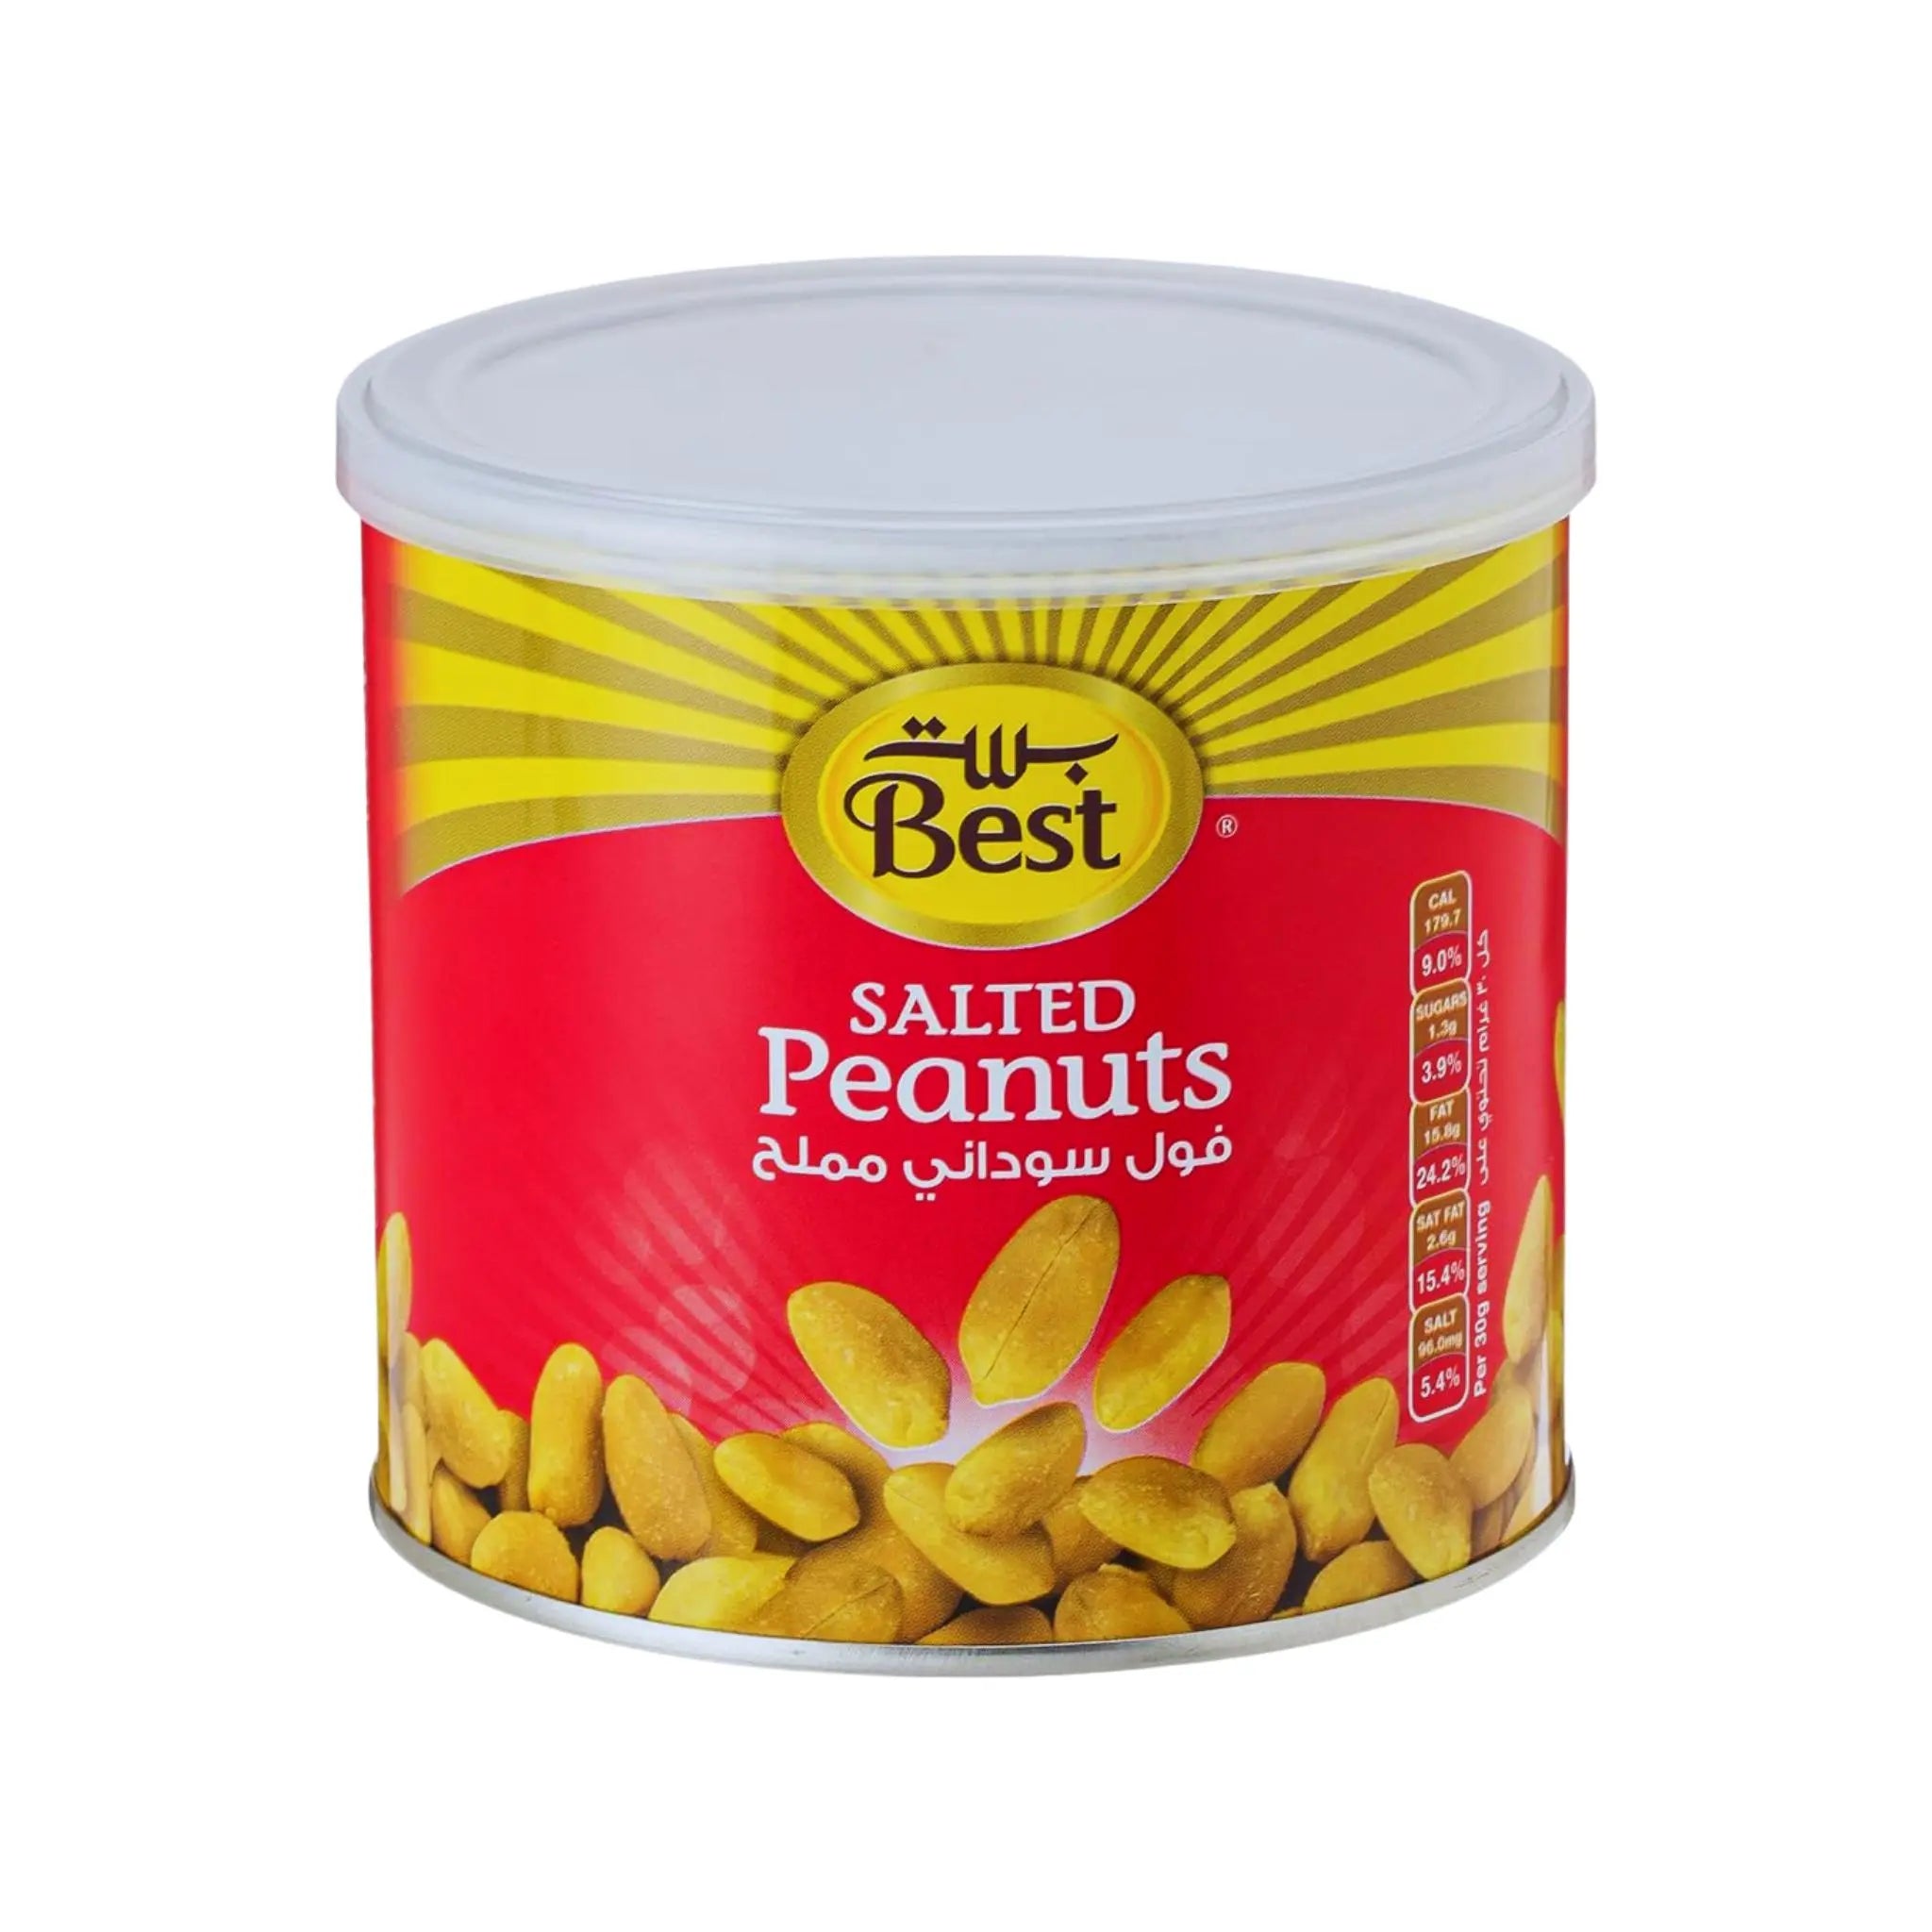 Best Salted Peanuts - 12x300g (1 carton) - Marino.AE